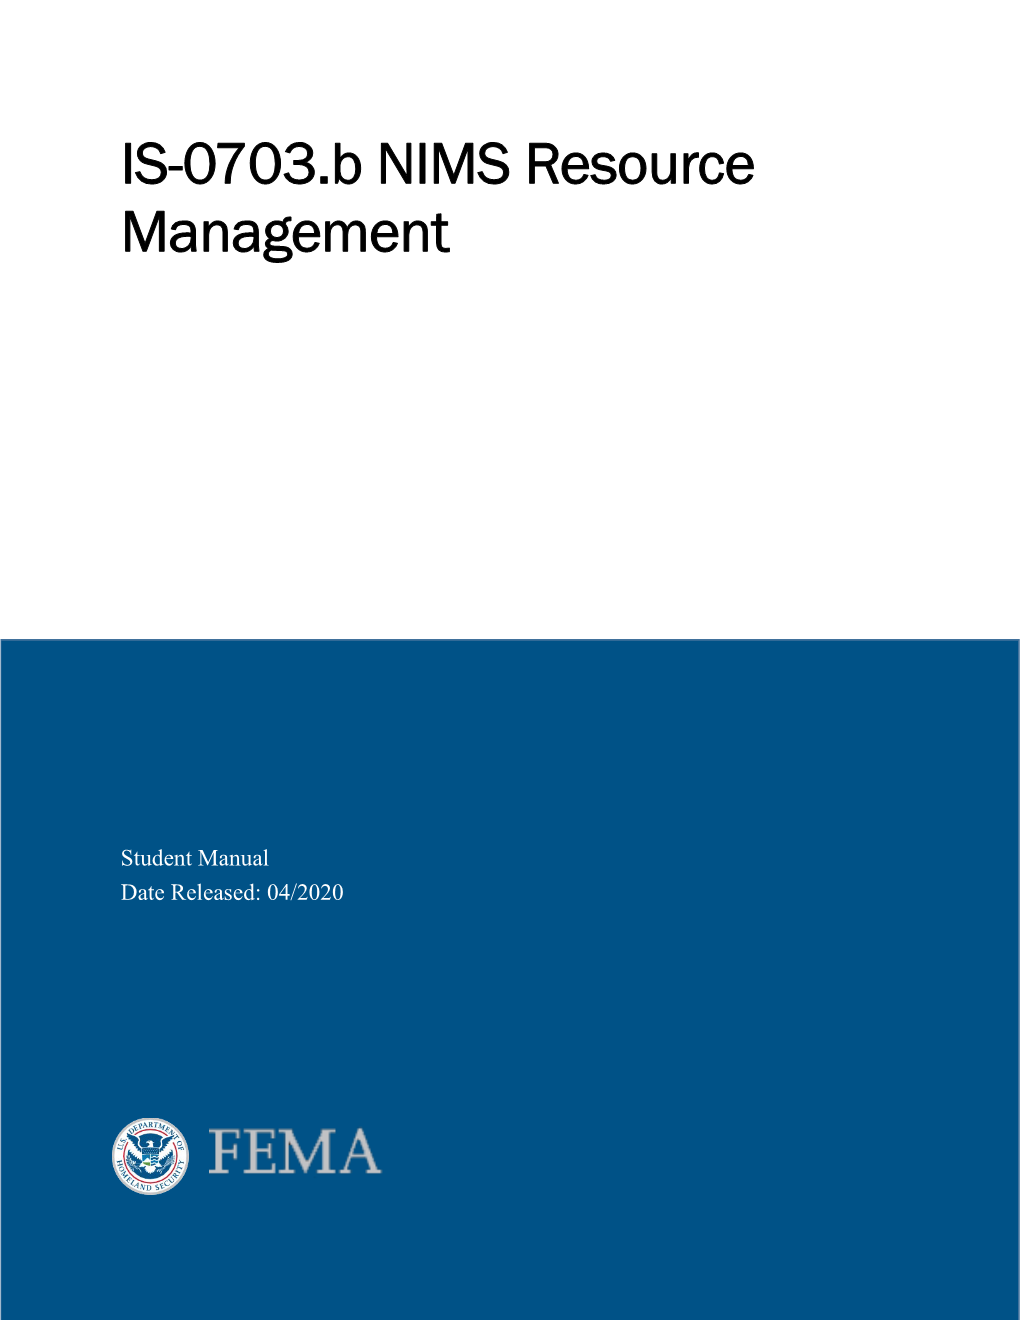 IS-0703.B NIMS Resource Management